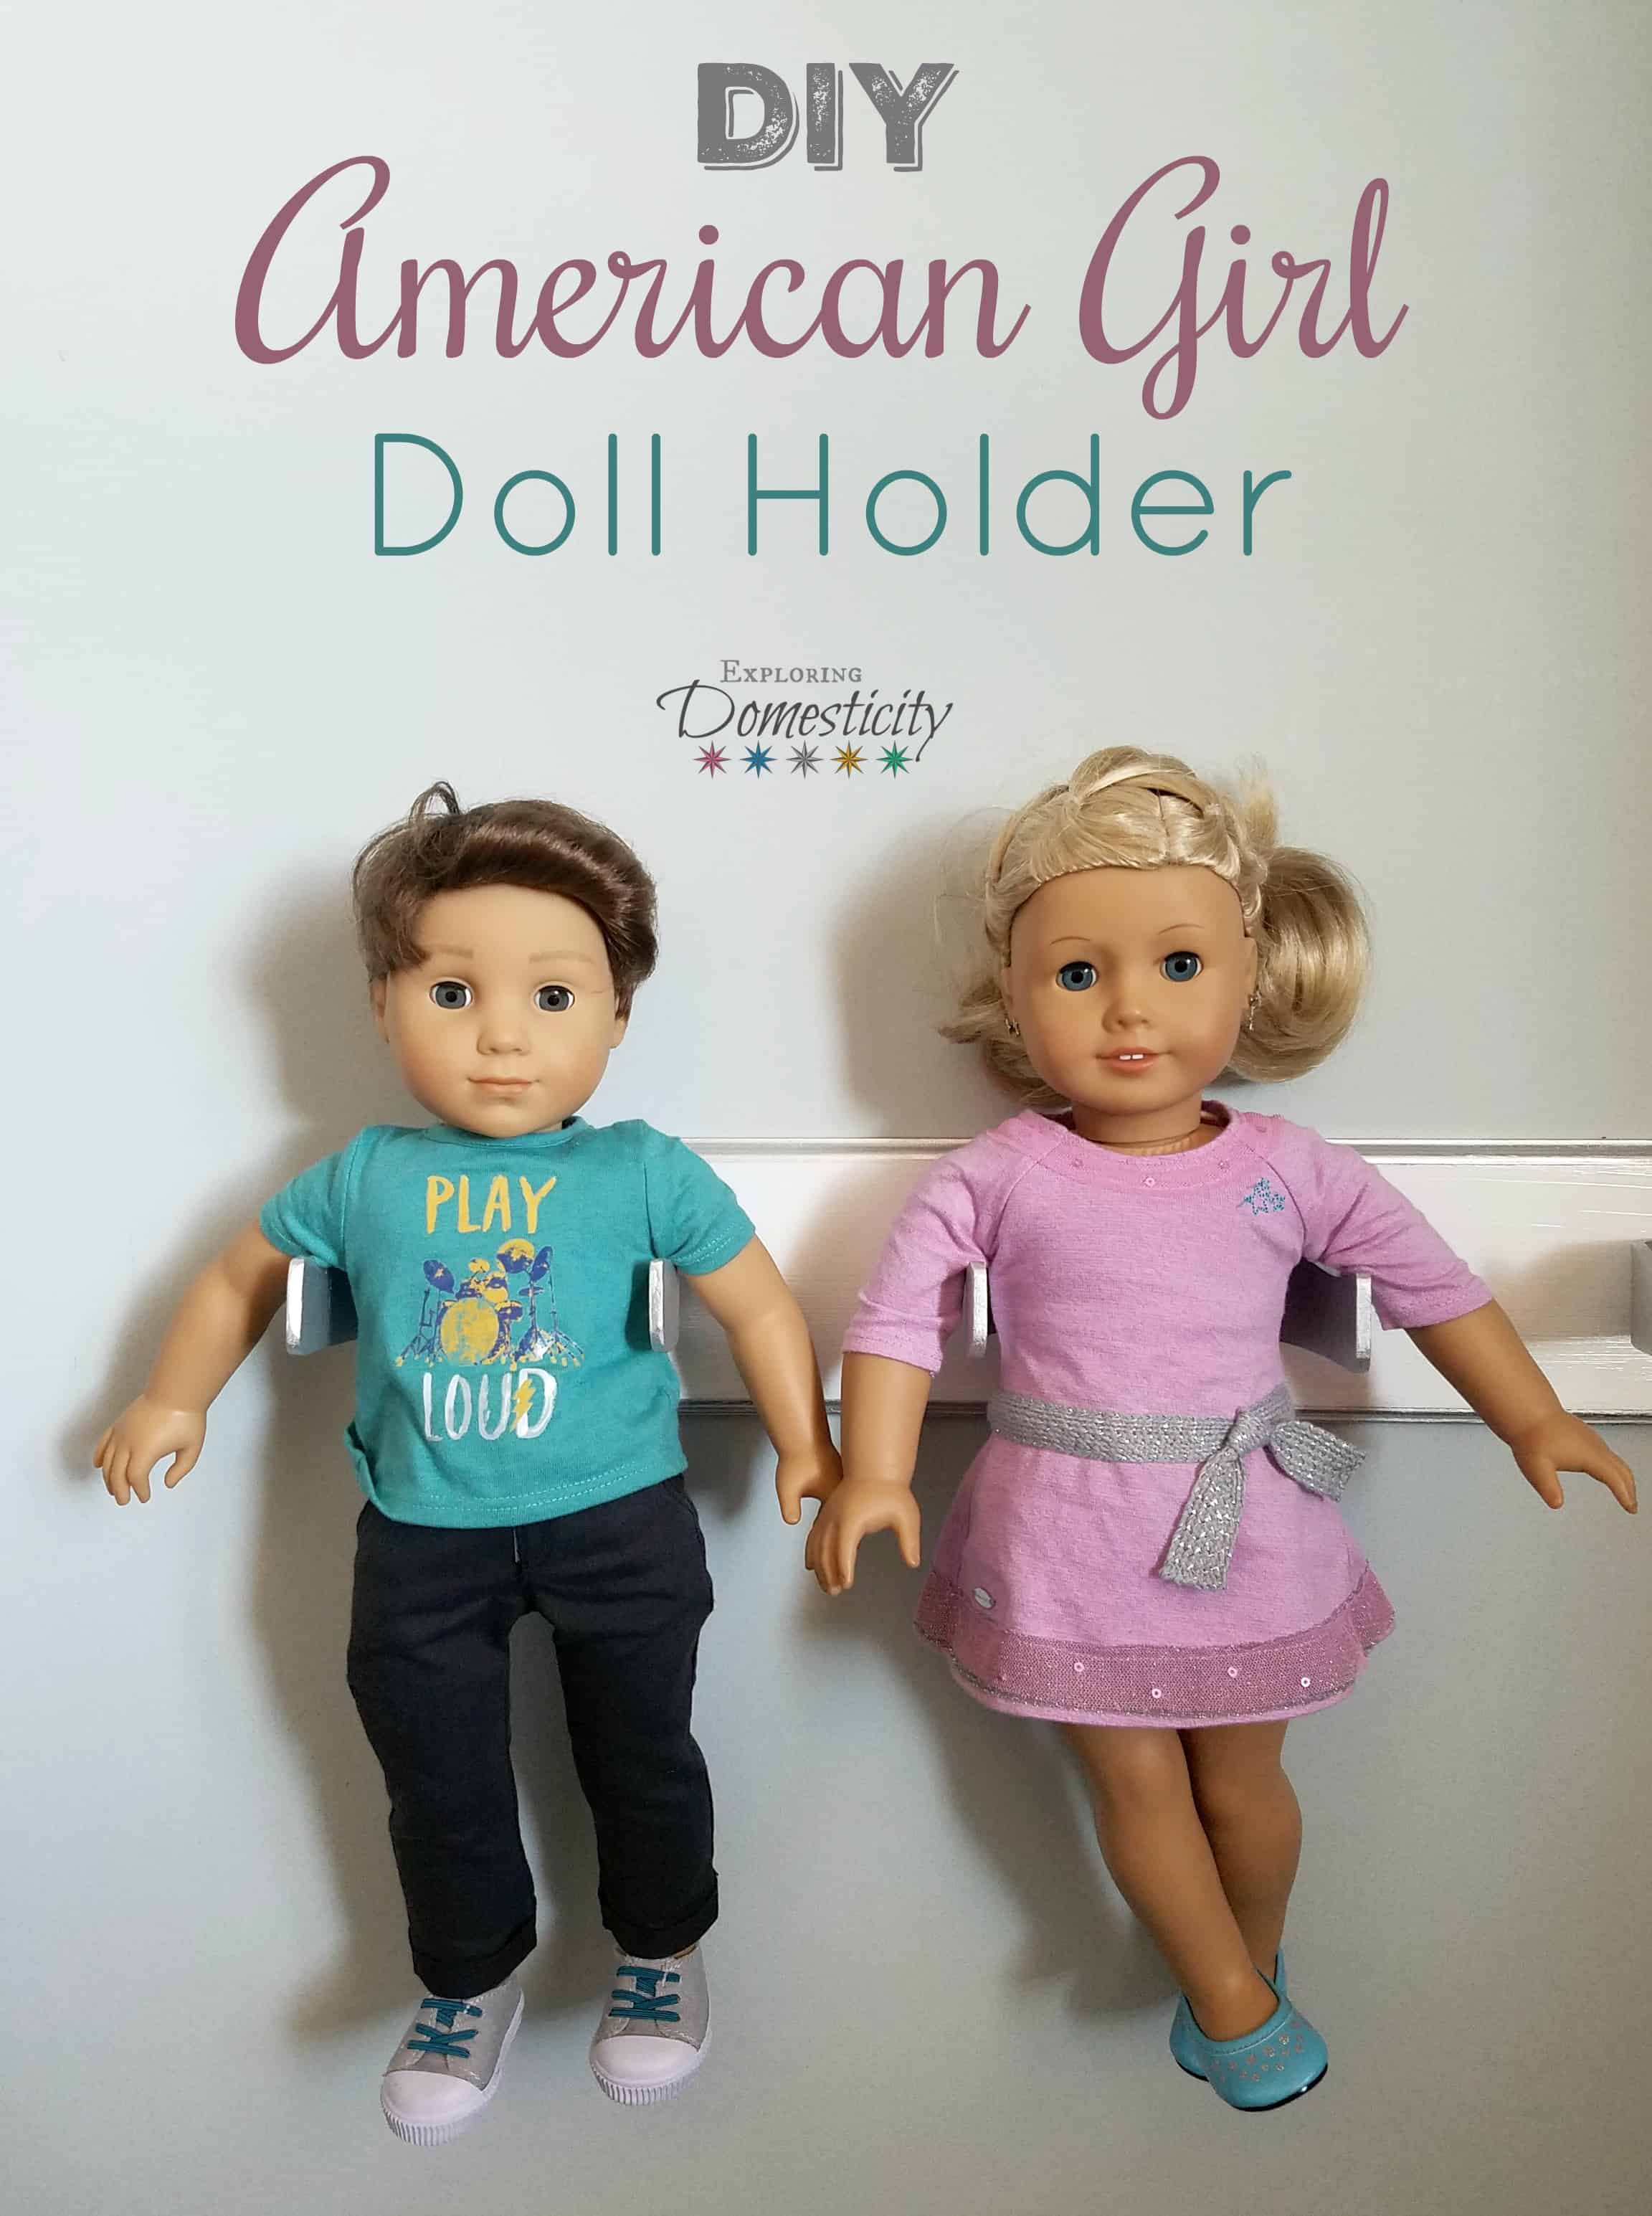 Diy american girl doll holder